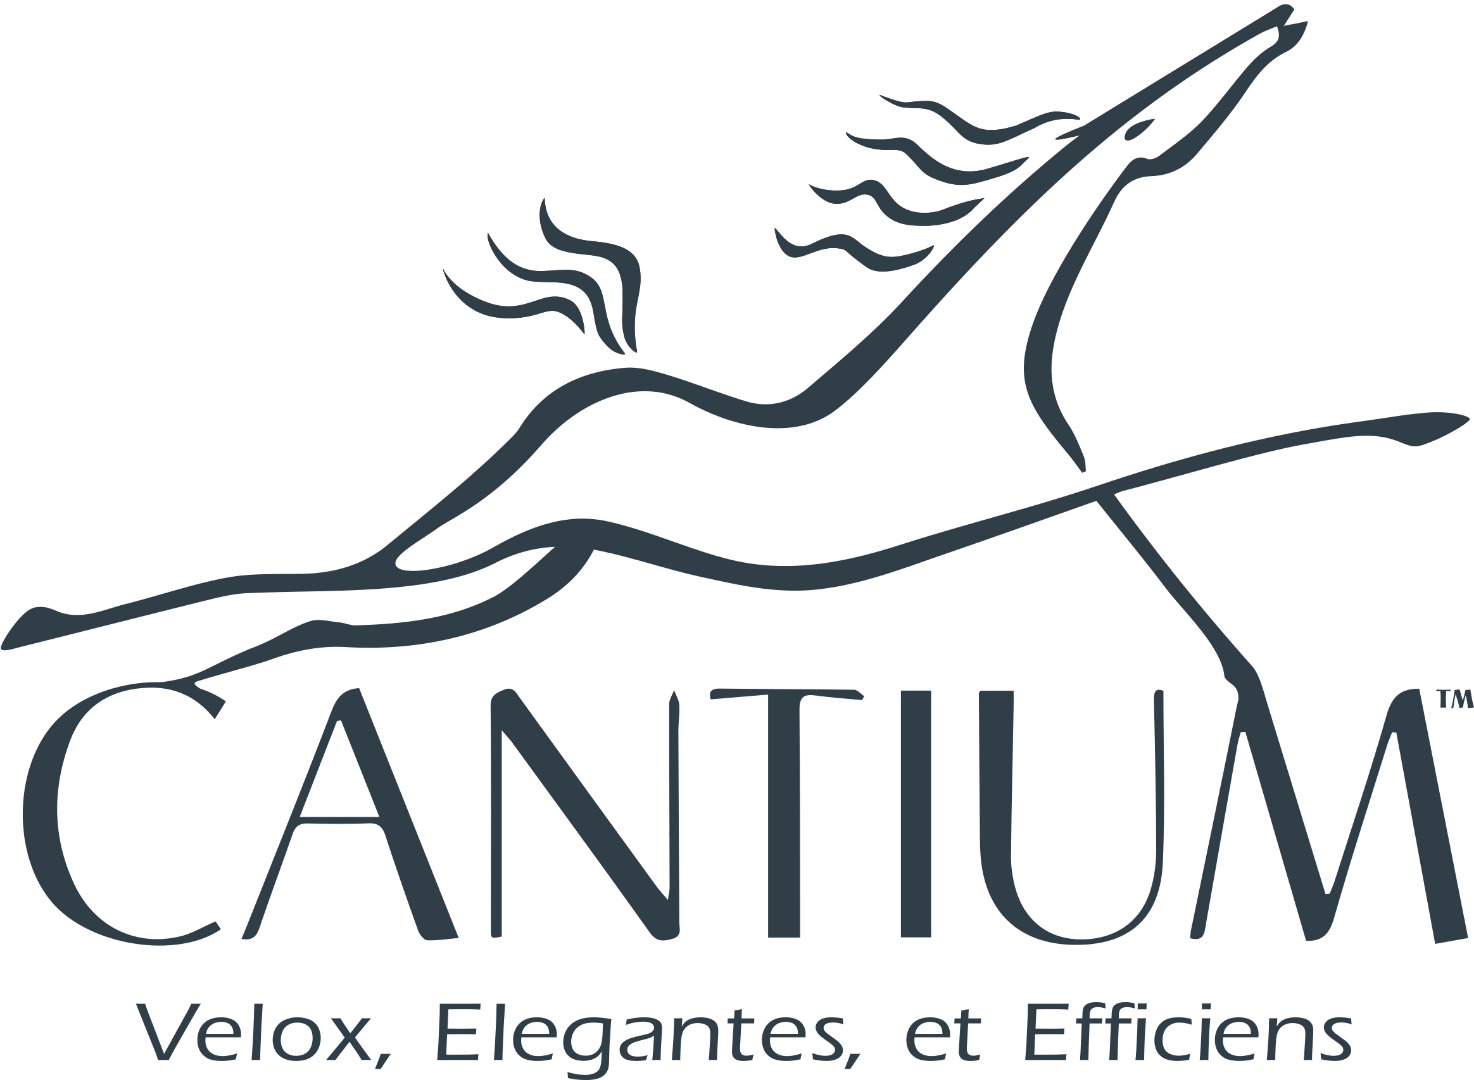 Cantium_Logo_Text_Tagline